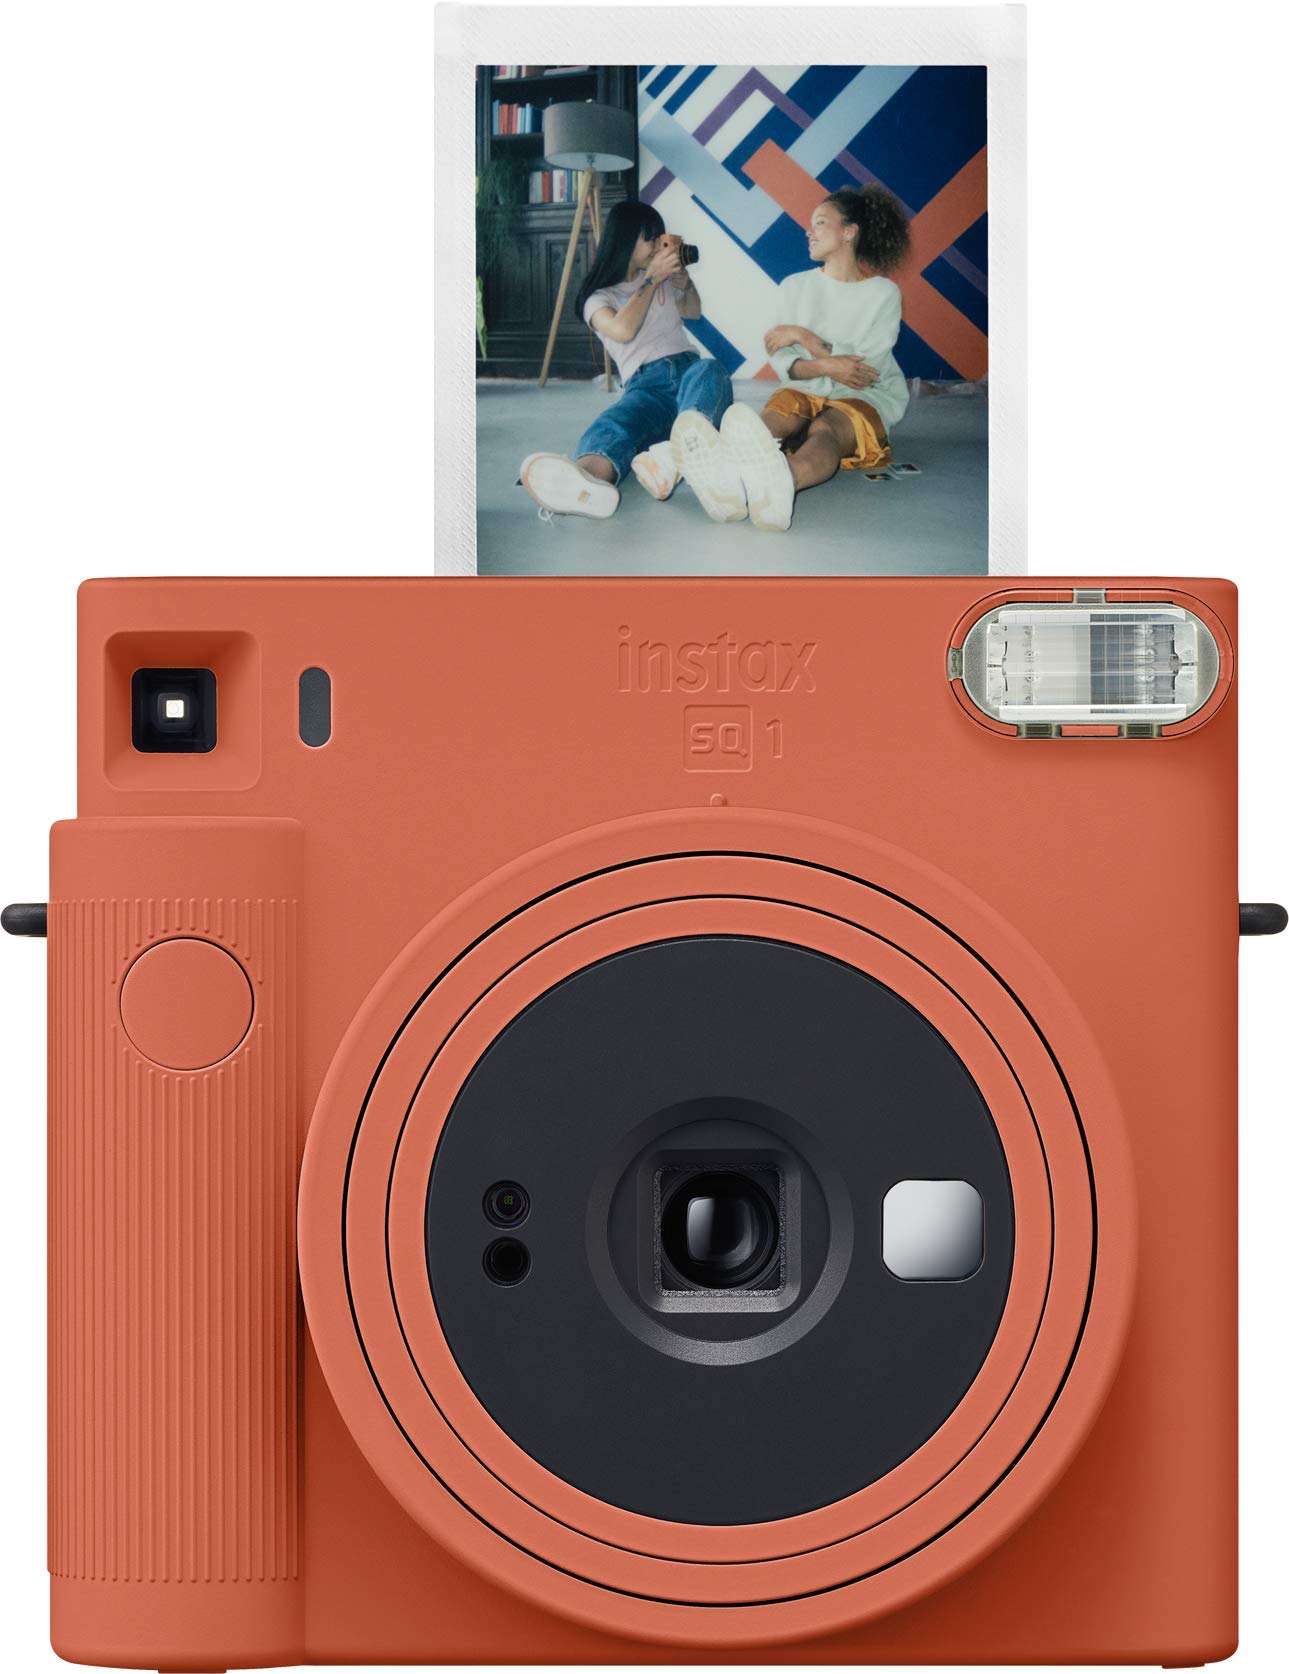 FUJIFILM Instax Square SQ1 Instant Camera - Terracotta Oran